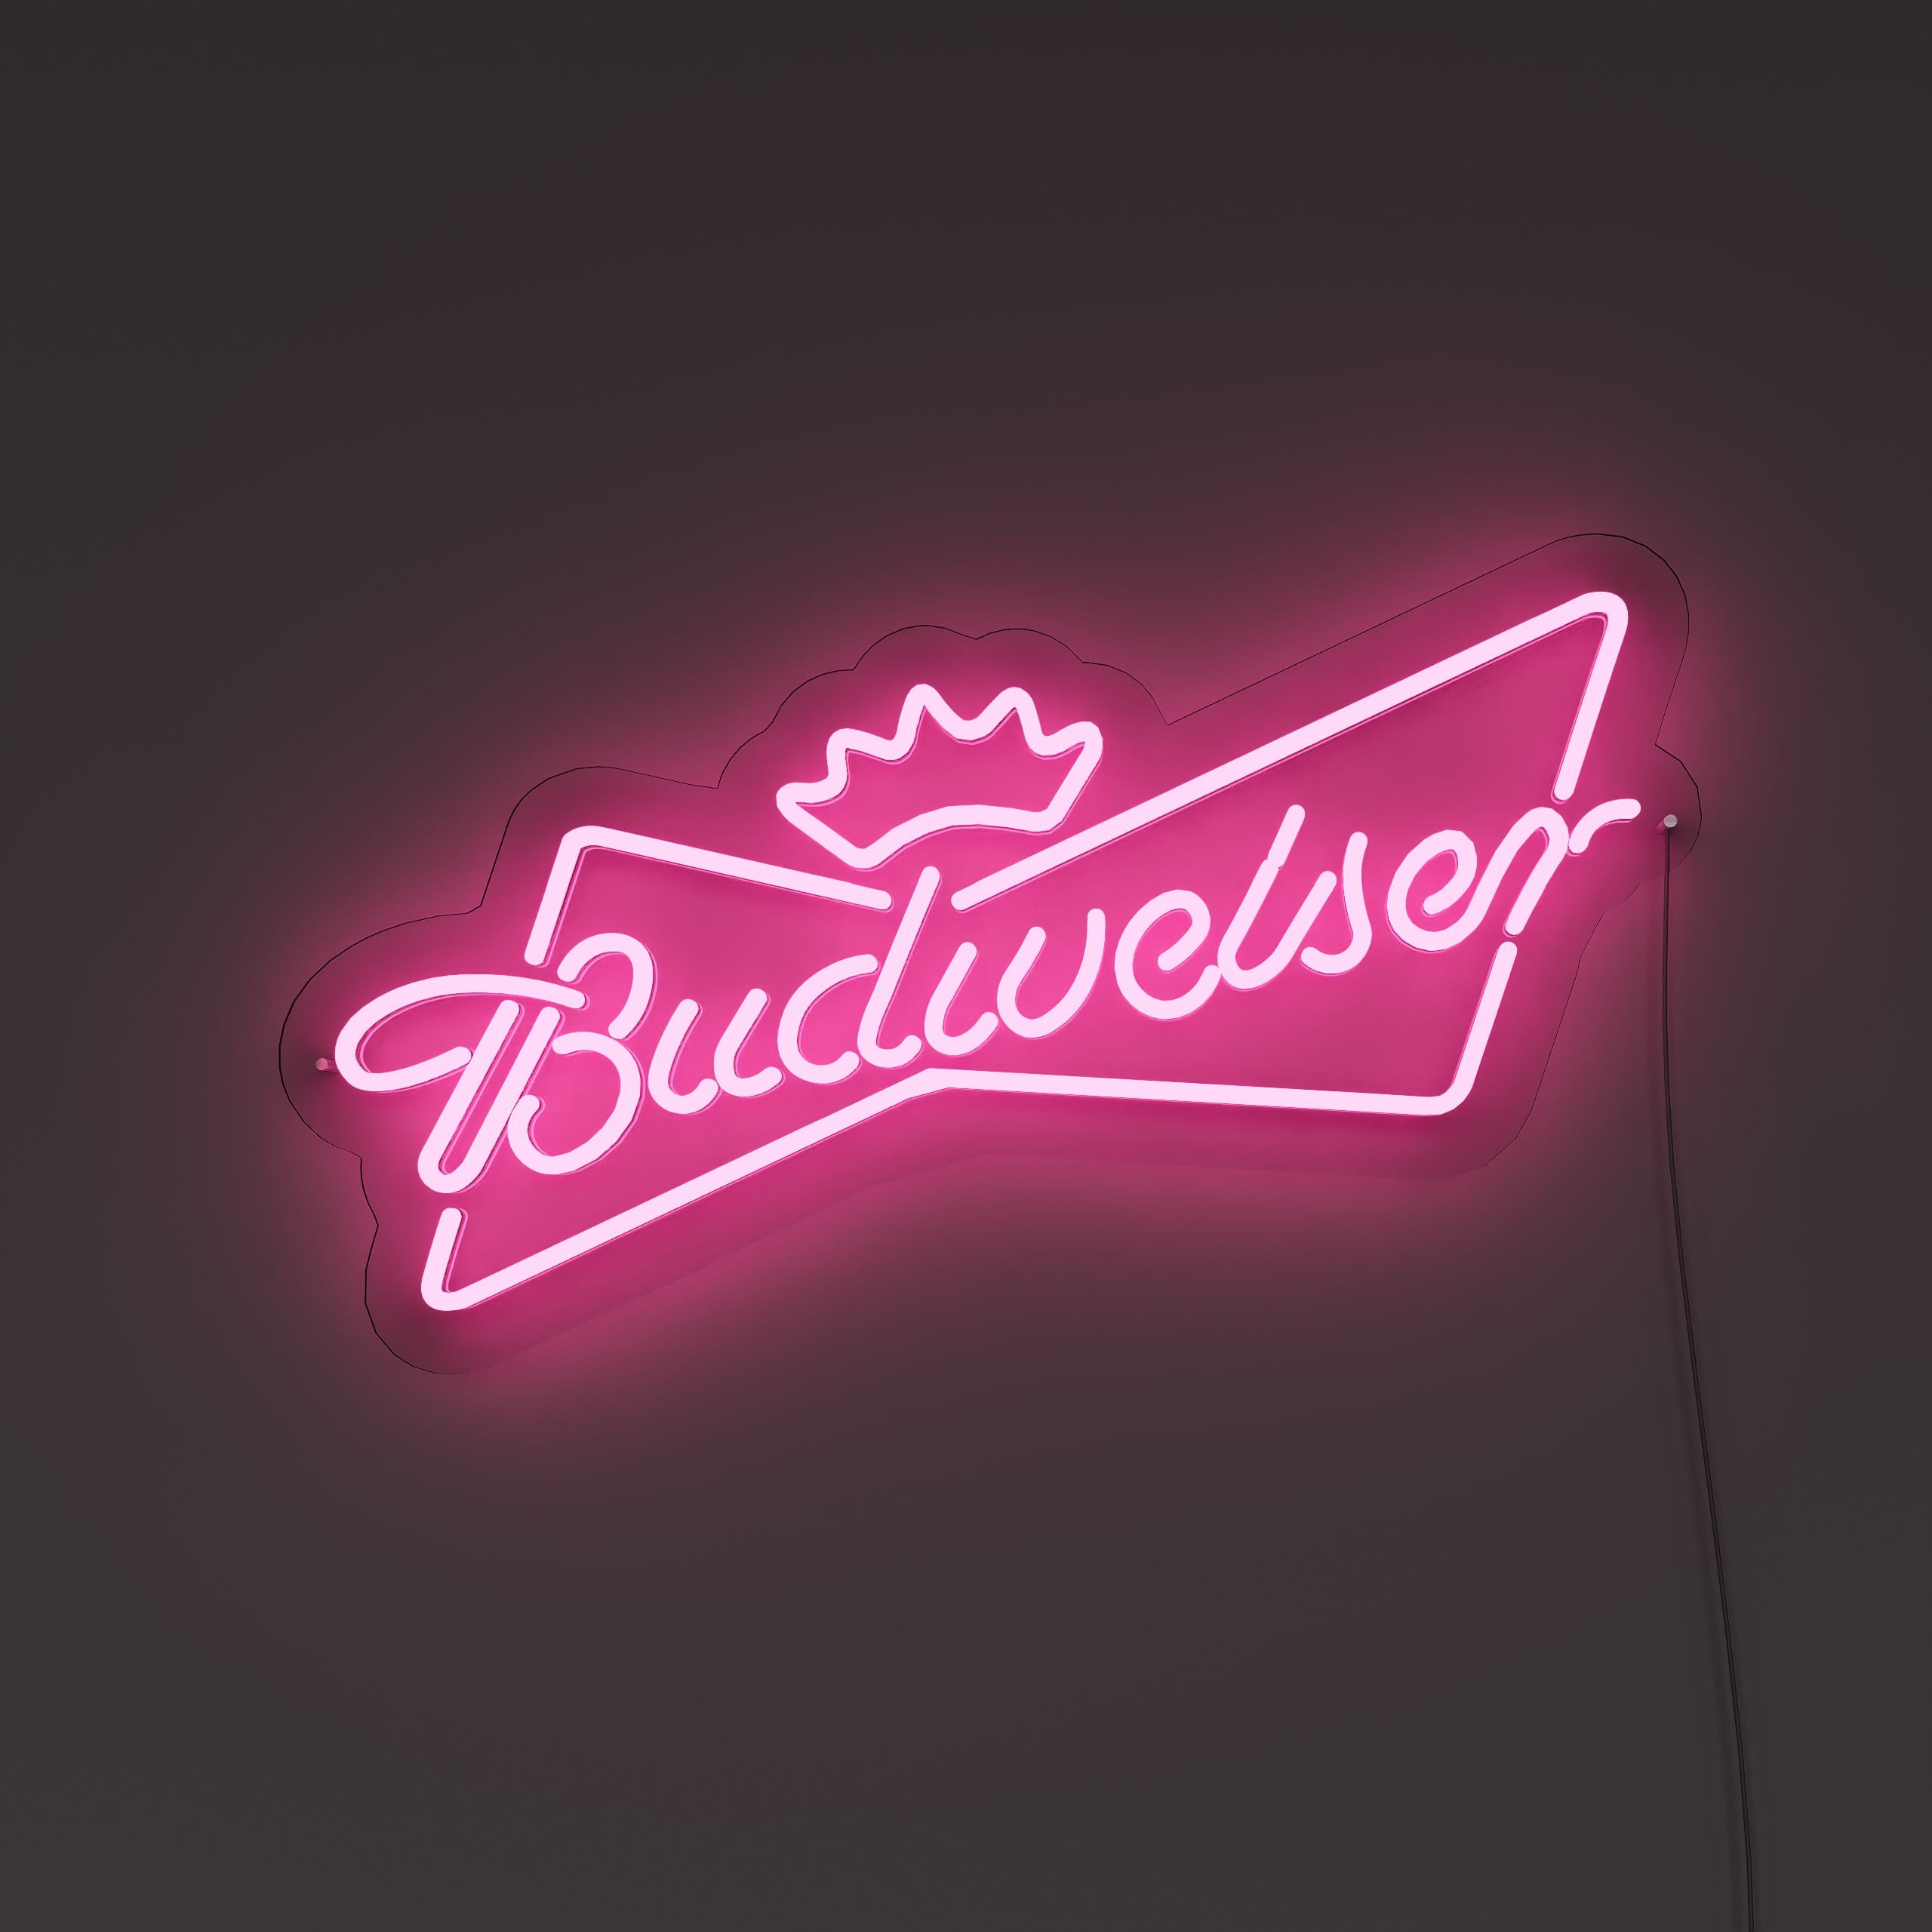 tbudweiser-neon-signs-DeepPink-Neon-sign-Lite